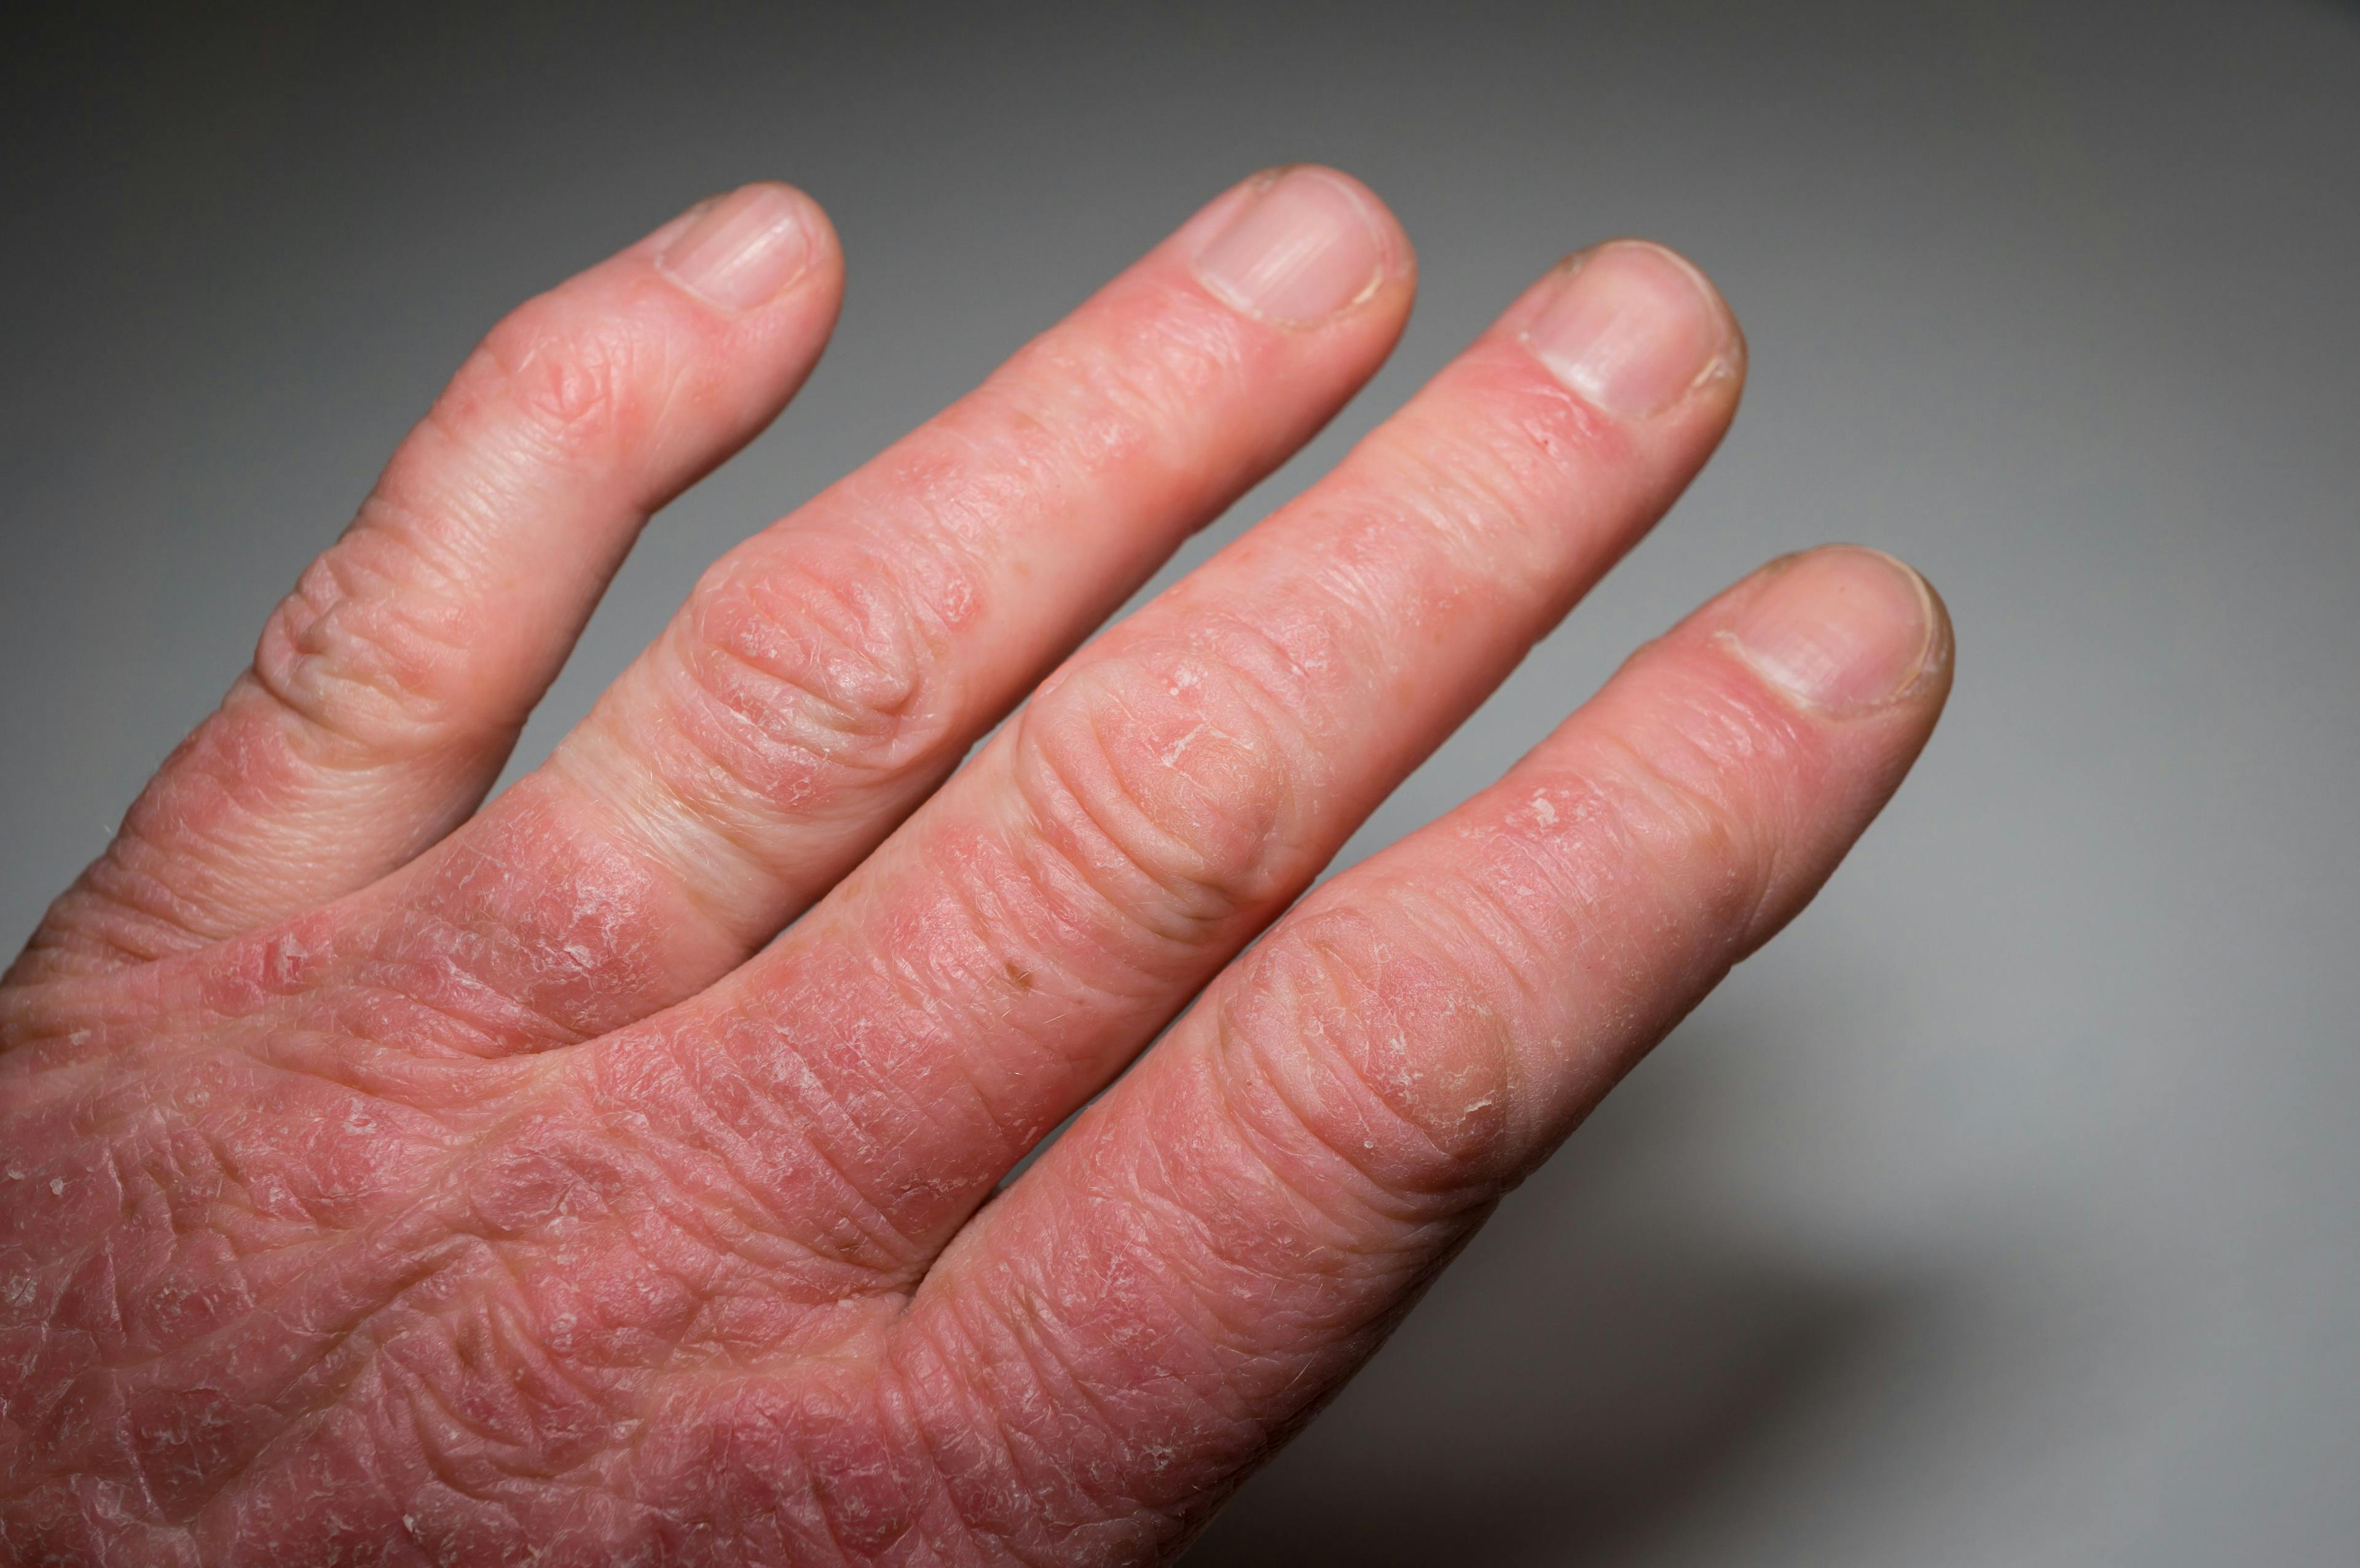 image of hands with psoriatic arthritis